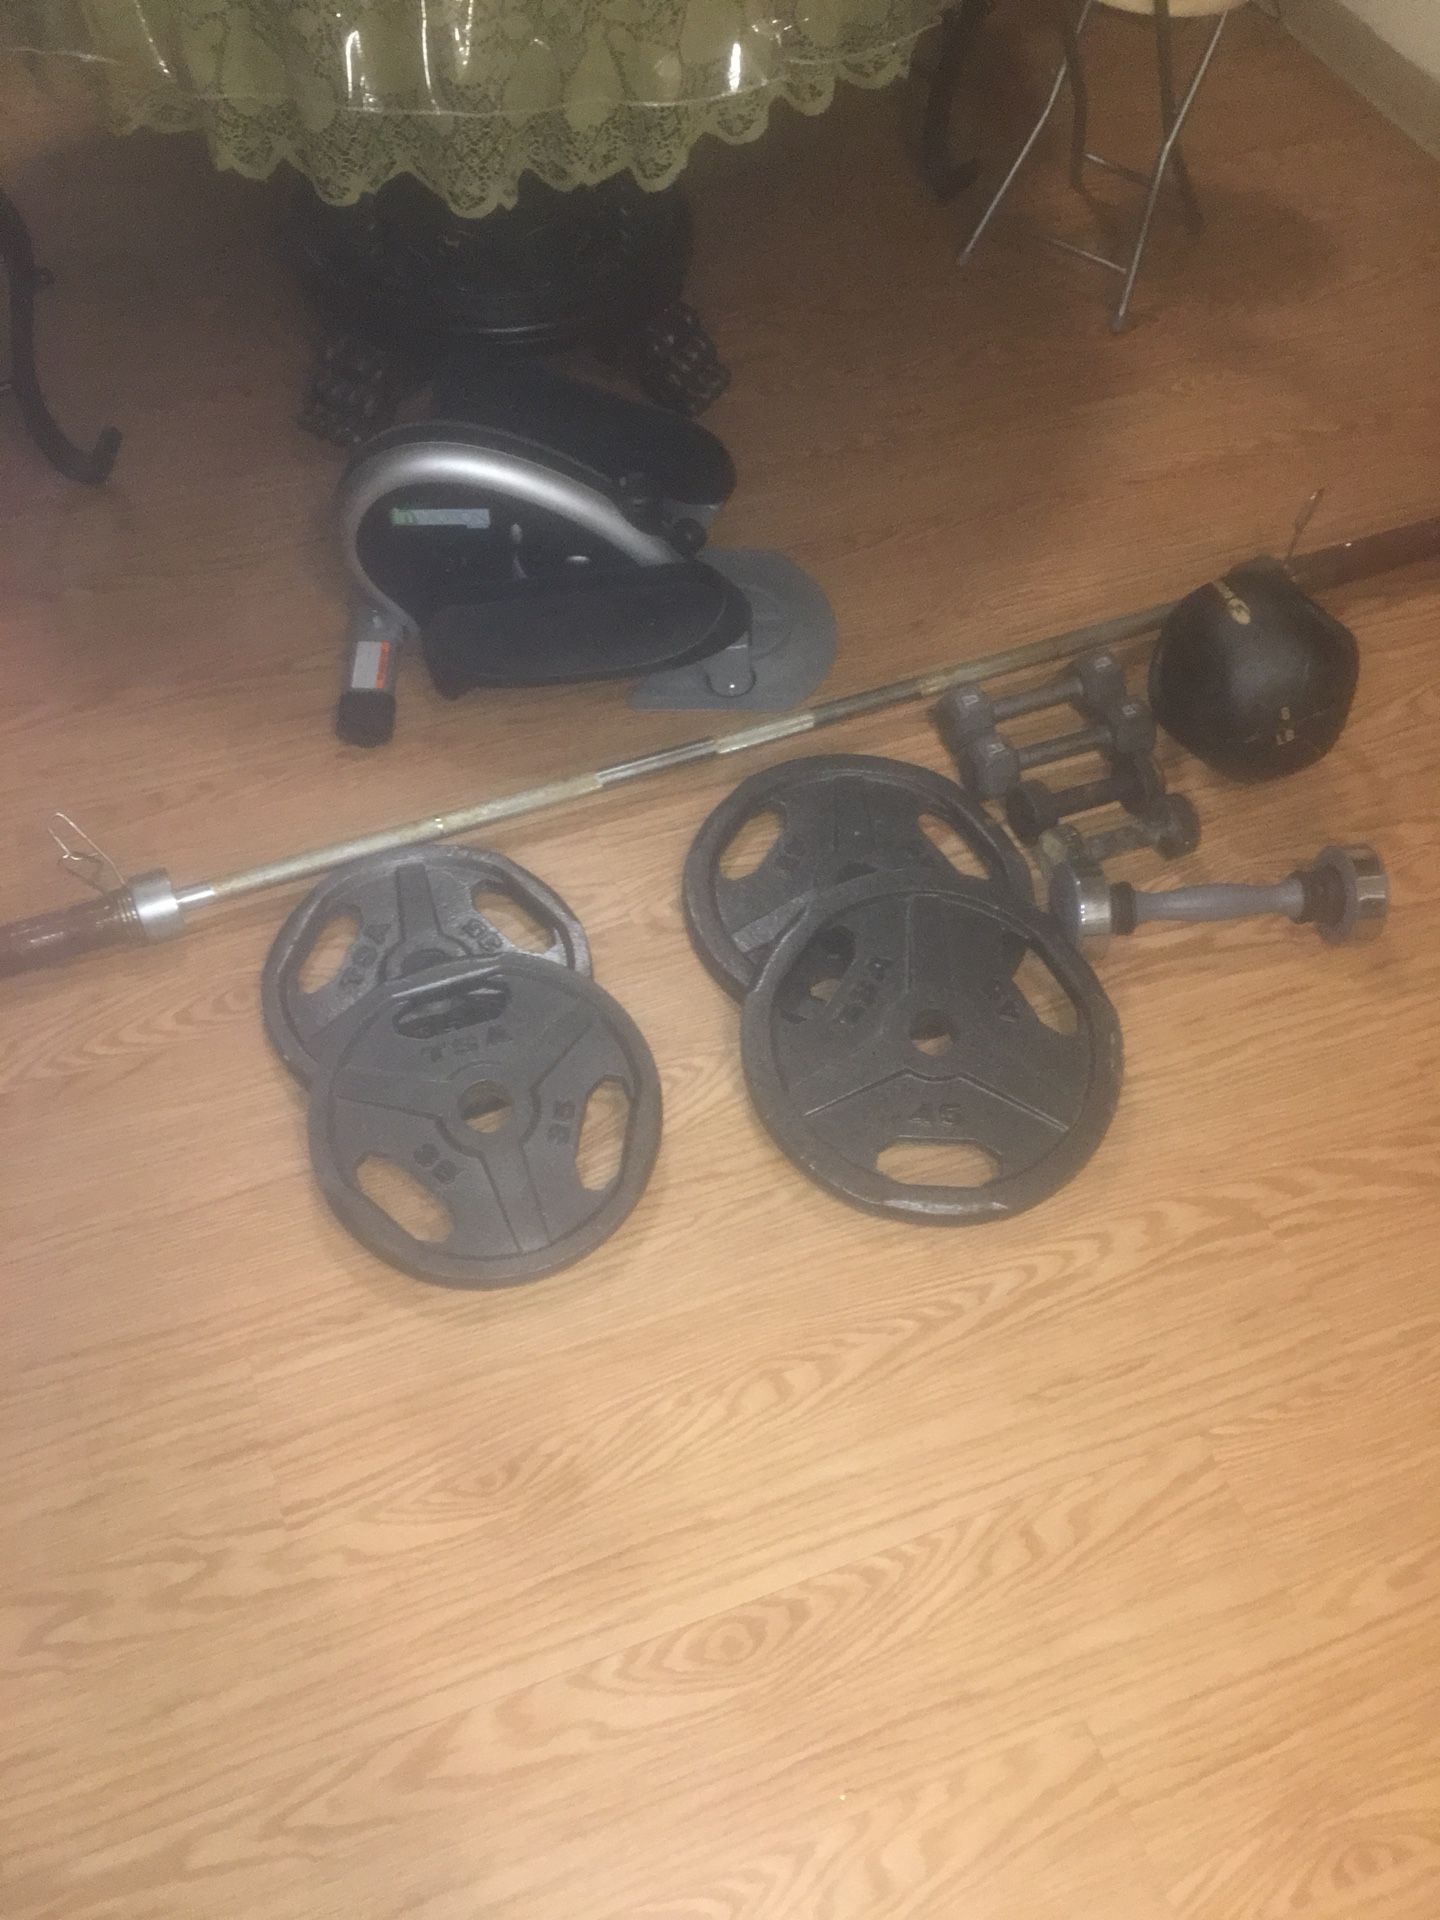 Set of weights $175